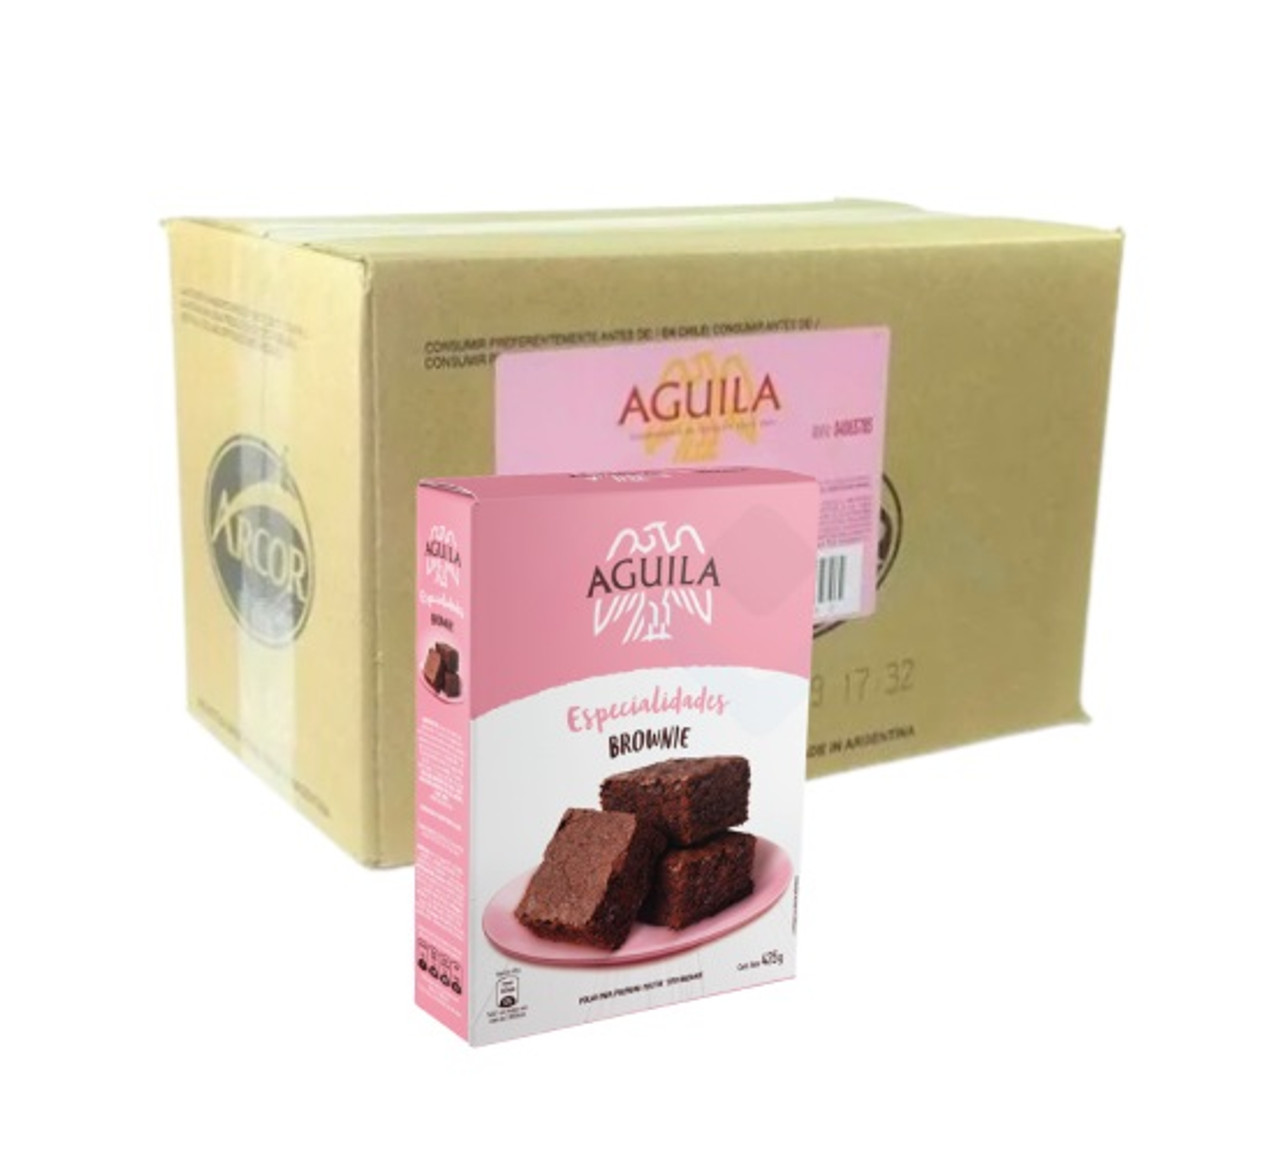 Águila Brownie Powder Ready To Make Classic Homemade Chocolate Brownies  Wholesale Bulk Box, 425 g / 